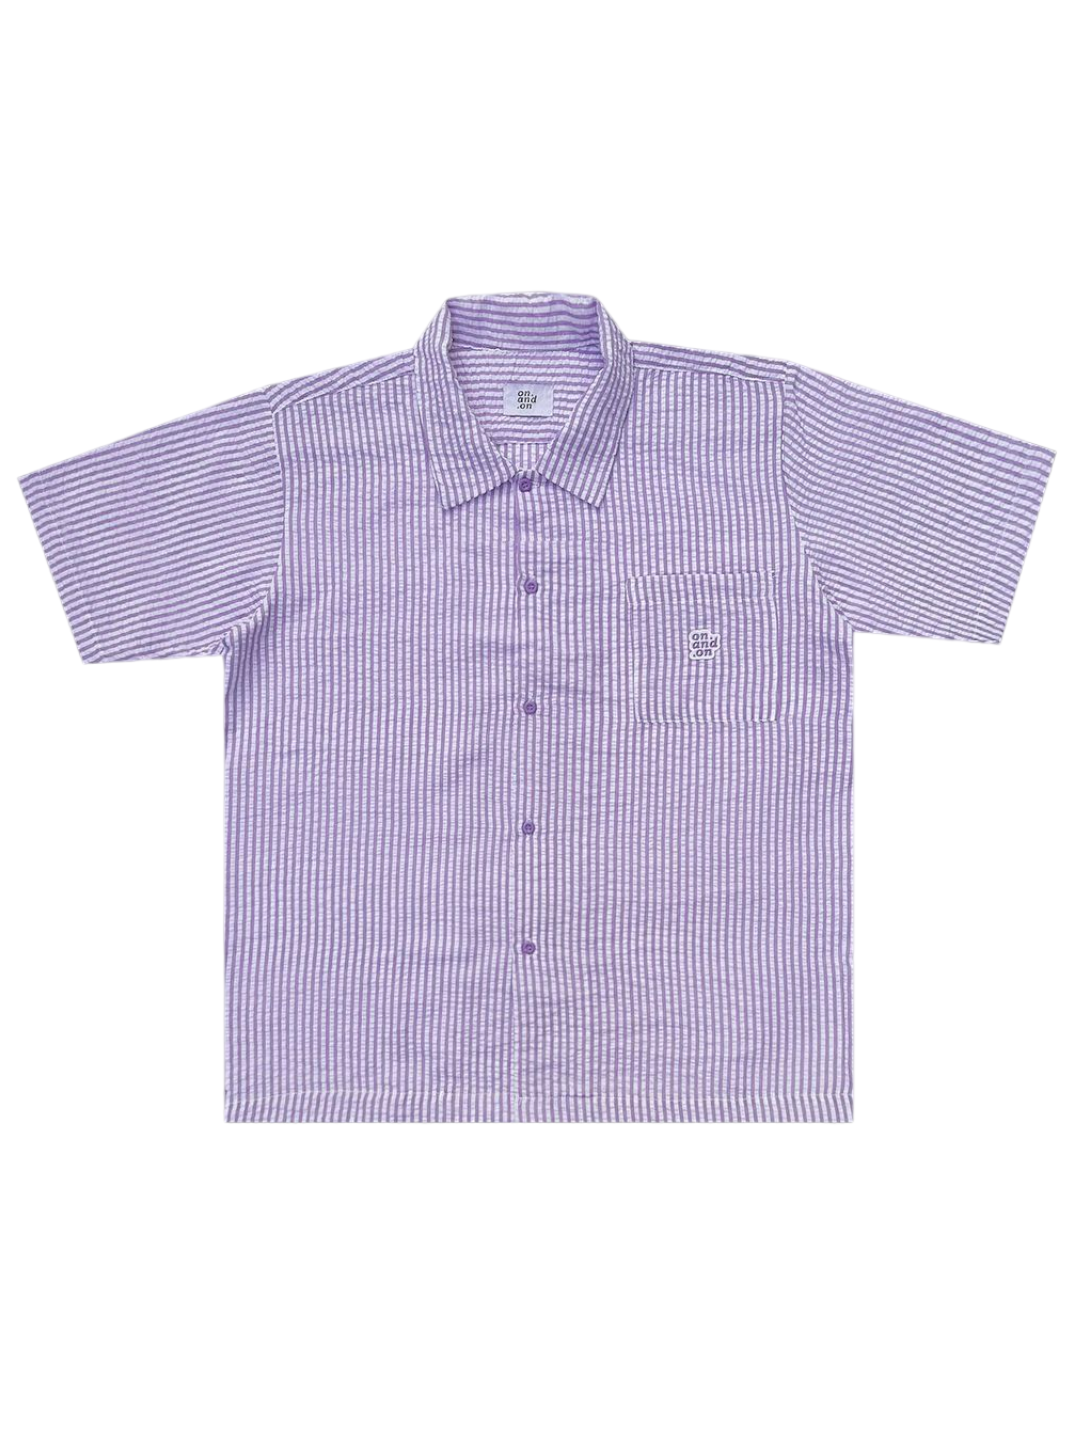 On.and.on.bkk Dazzle Shirt (Purple)